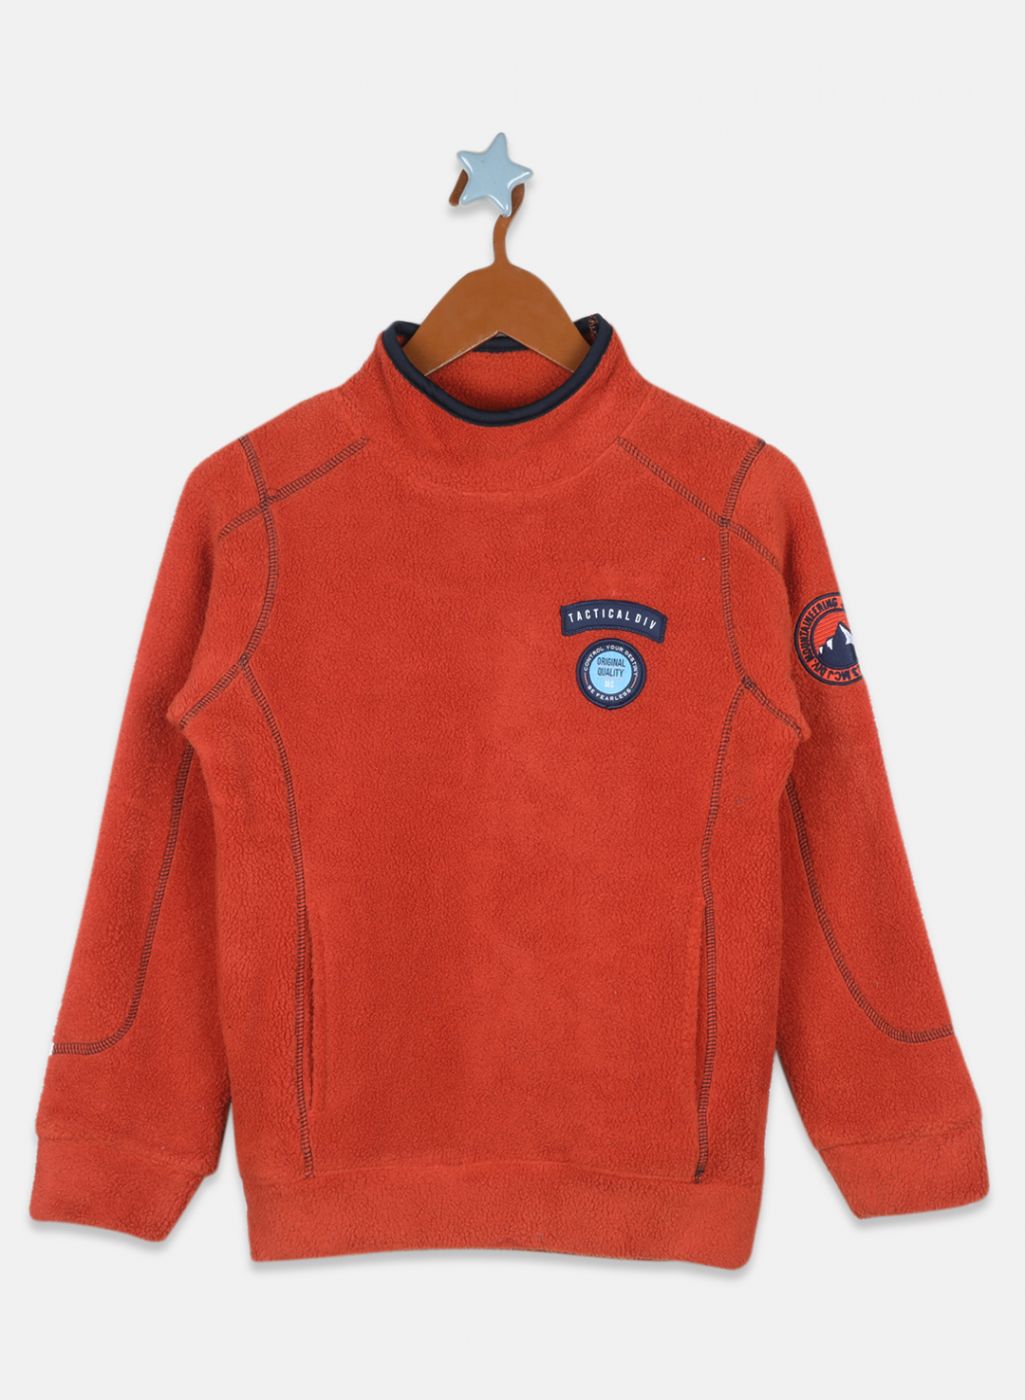 Boys Rust Orange Printed Sweatshirt